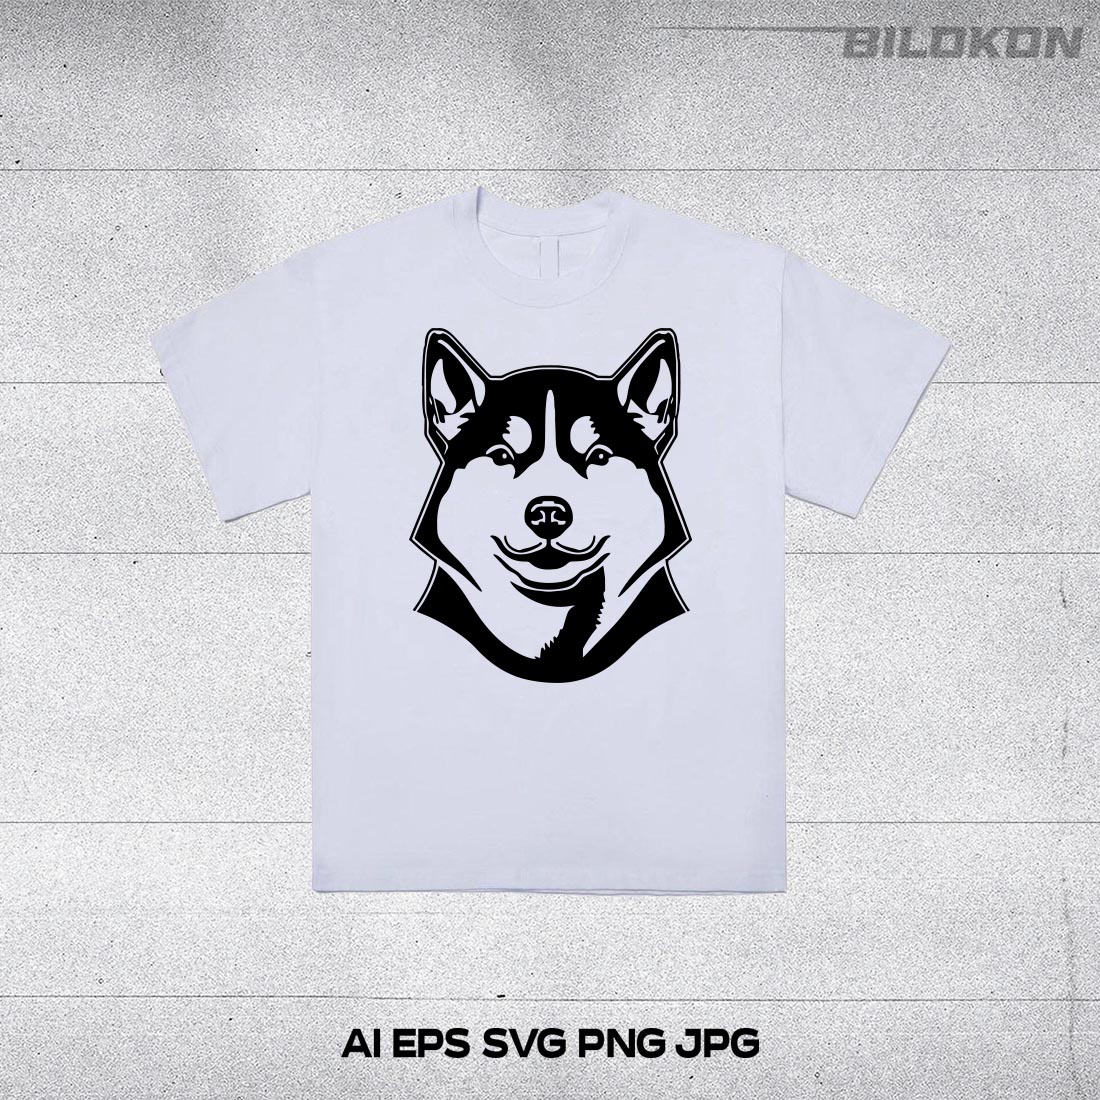 Shiba Inu dog face, SVG, Vector, Illustration preview image.